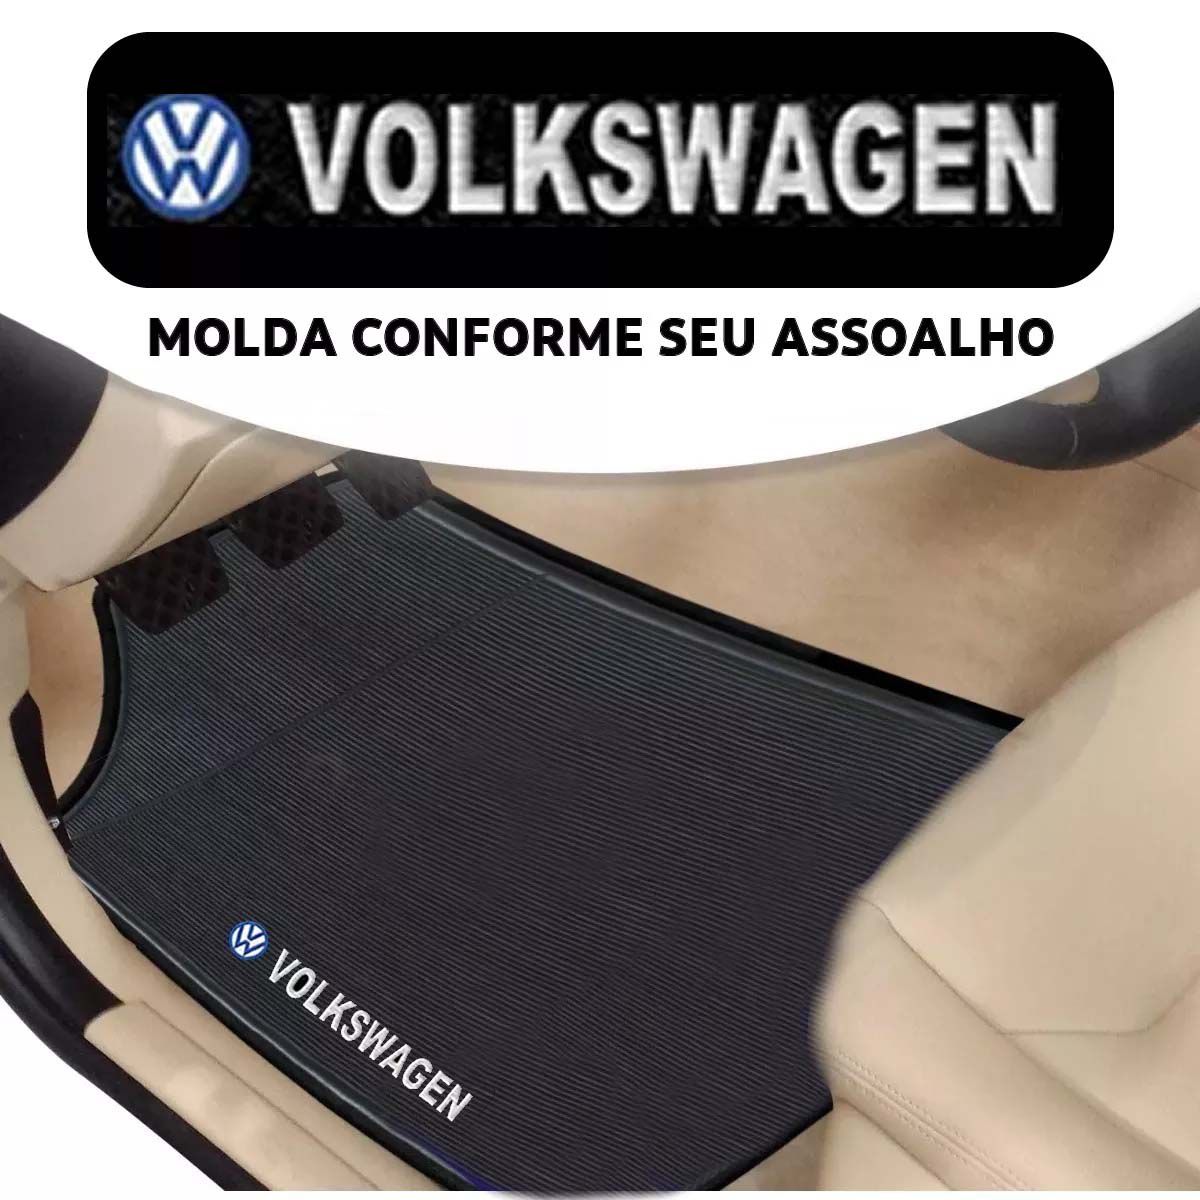 Tapete Borracha Volkswagen Gol Saveiro Golf Parati Todos Volkswagen Poliparts